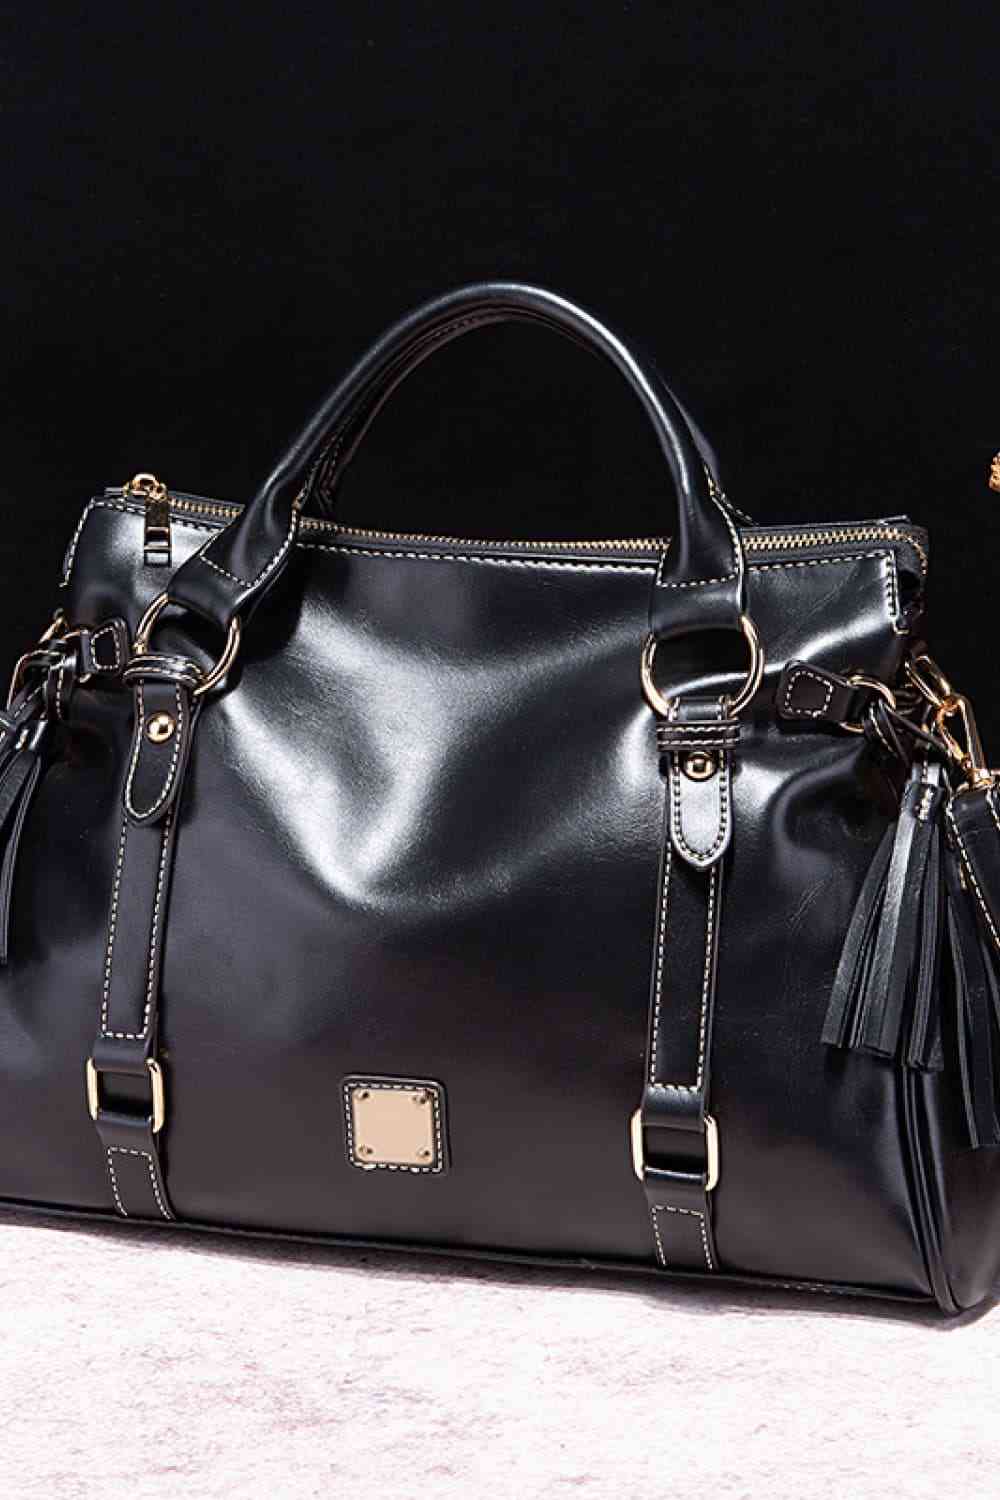 PU Leather Handbag with Tassels - Handbag - FITGGINS